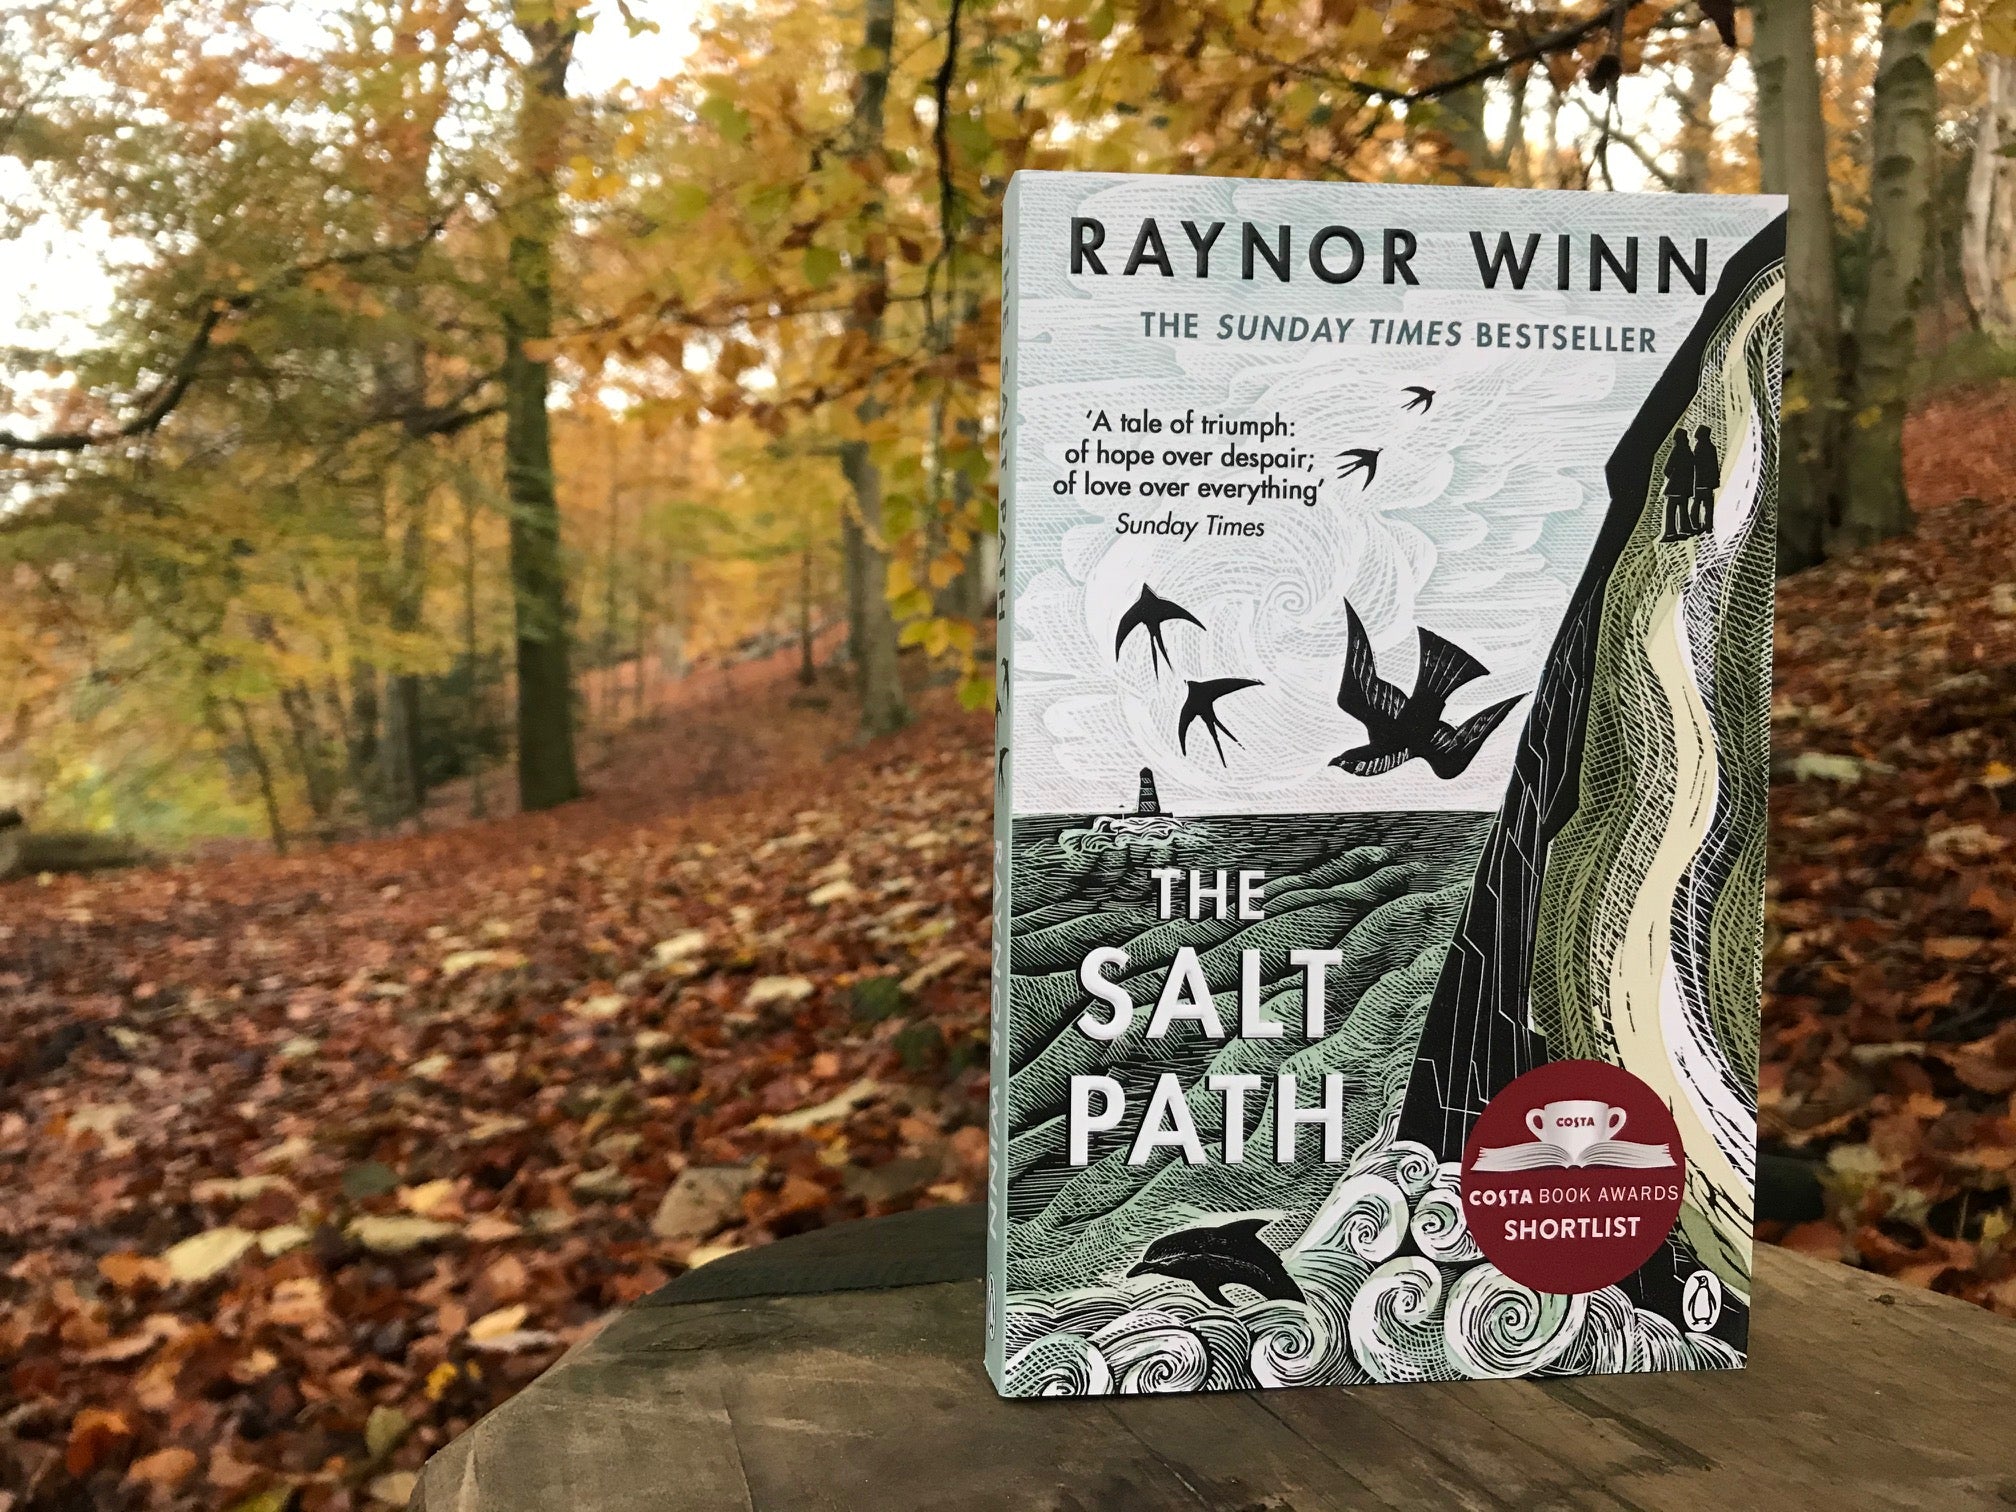 The Salt Path - Raynor Winn - November 2019